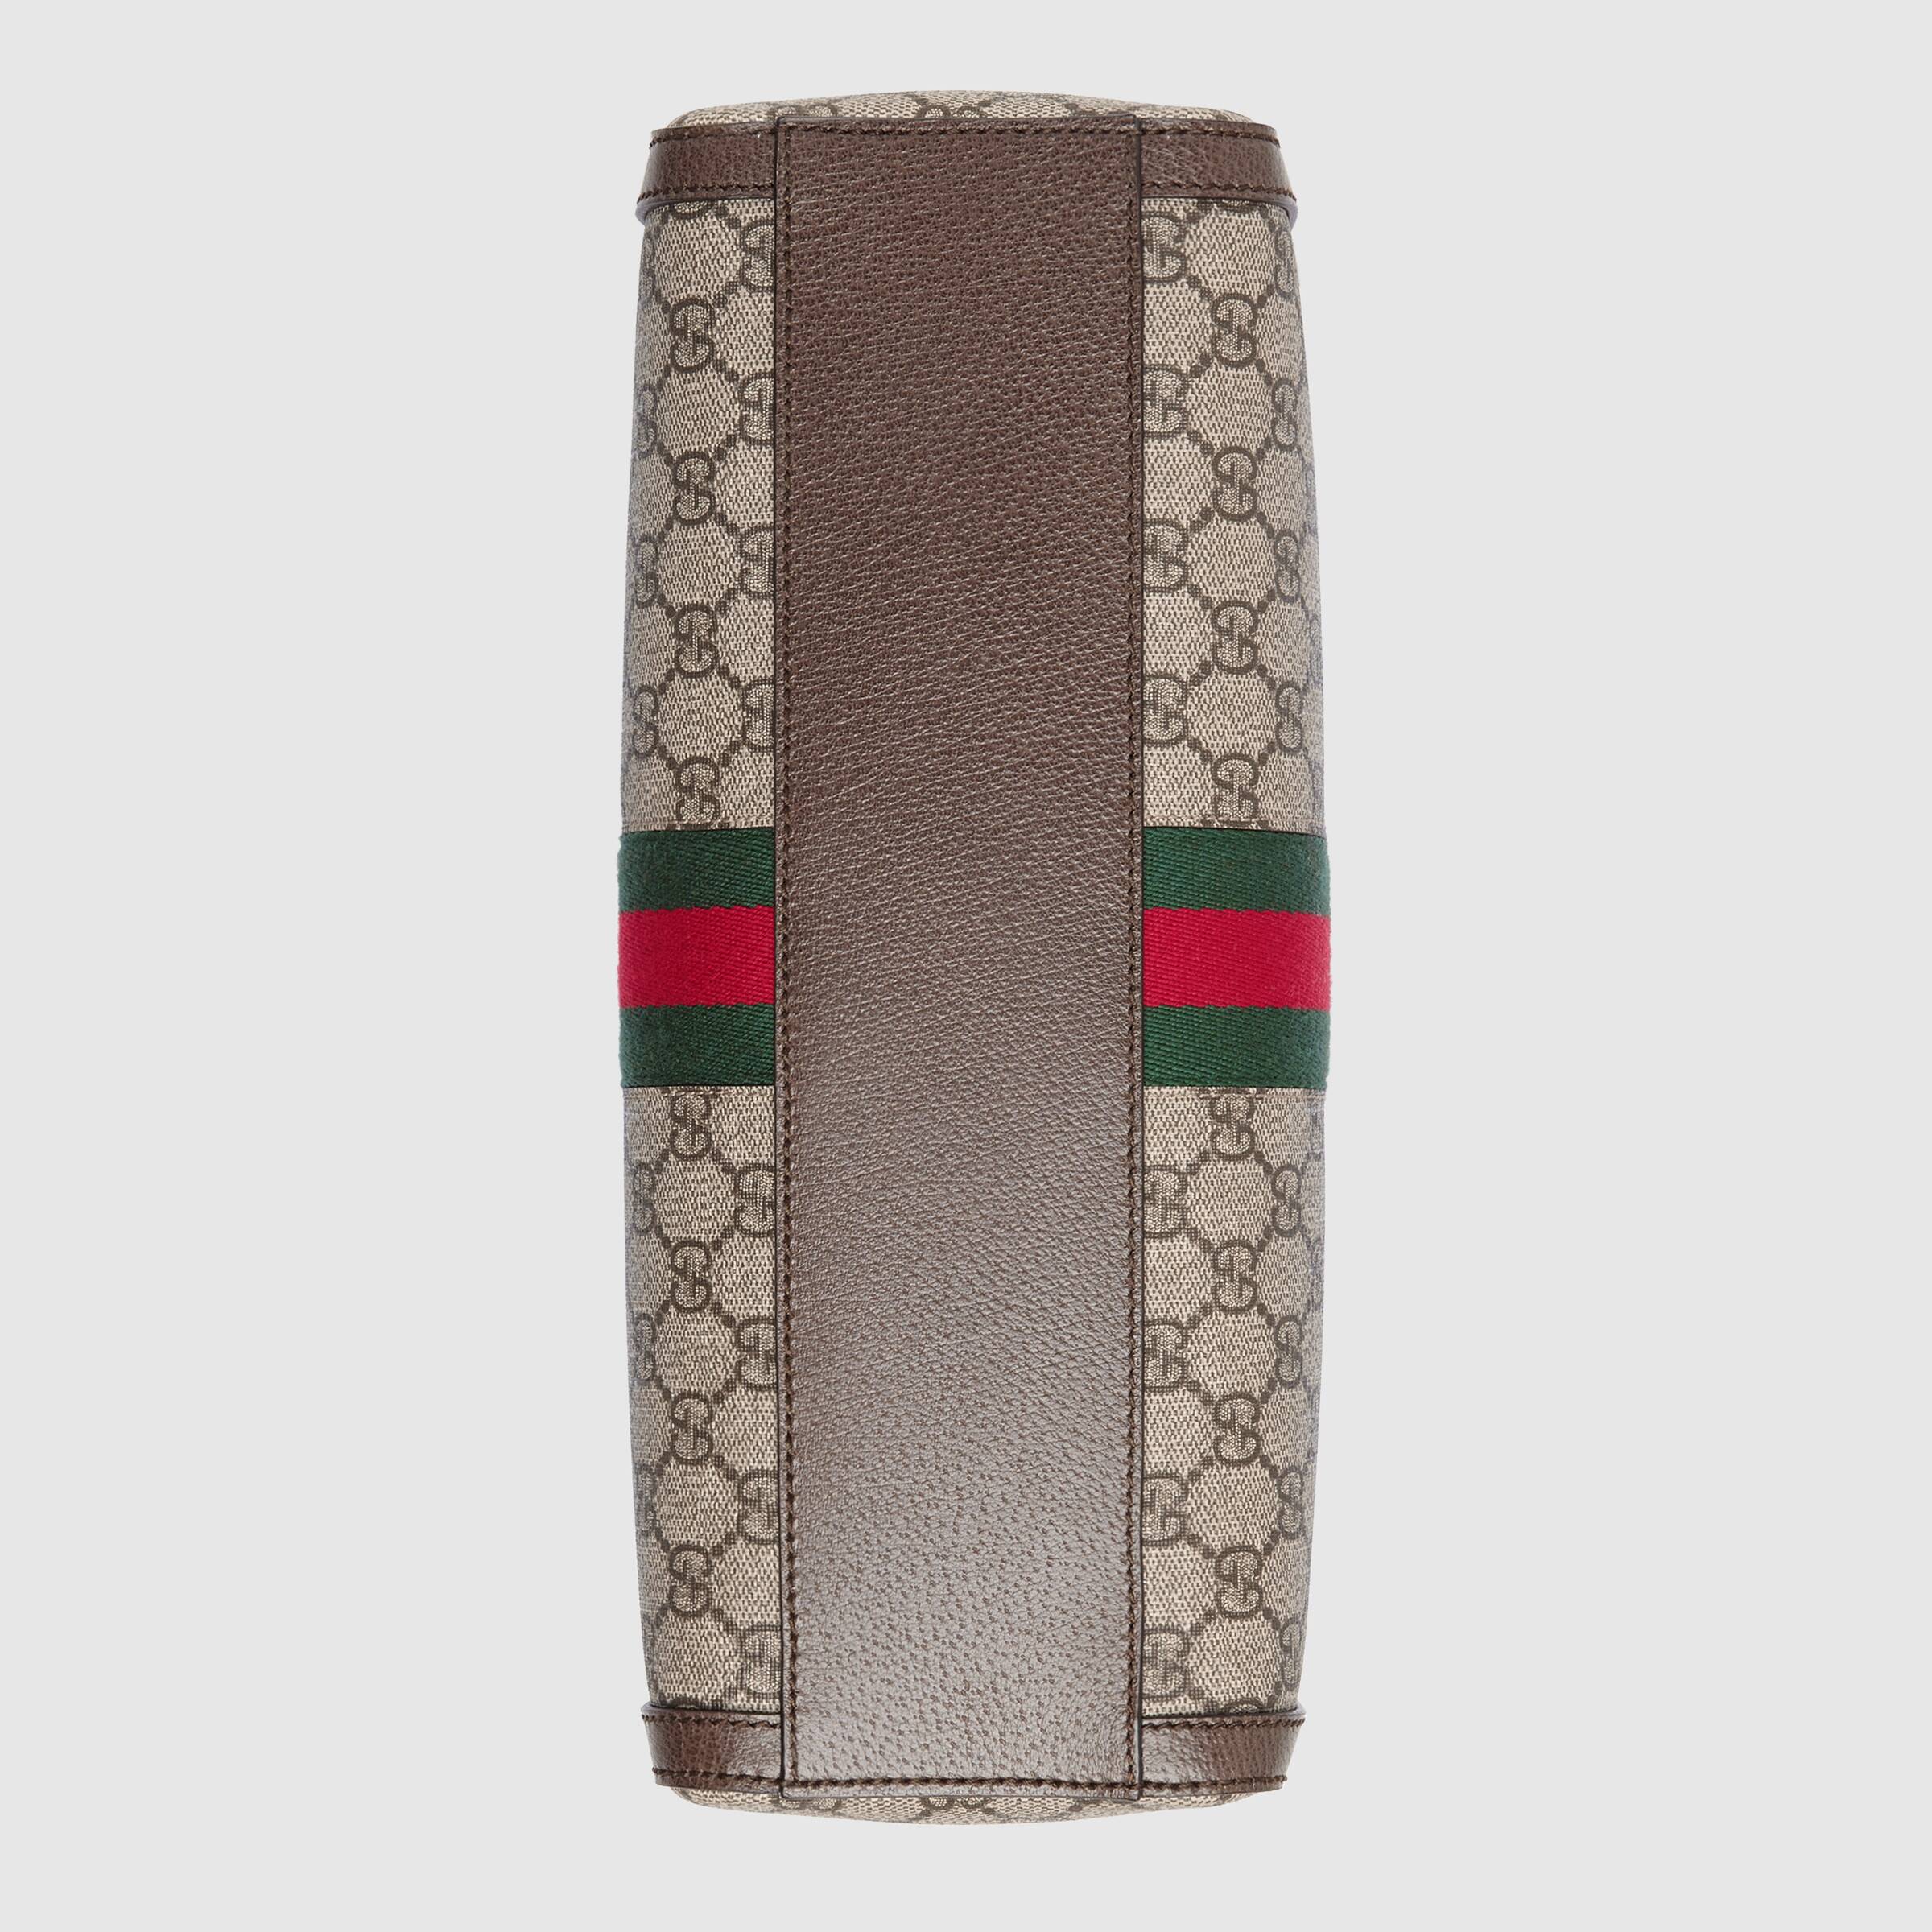 Gucci Ophidia Medium Top Handle Bag GG Supreme Canvas